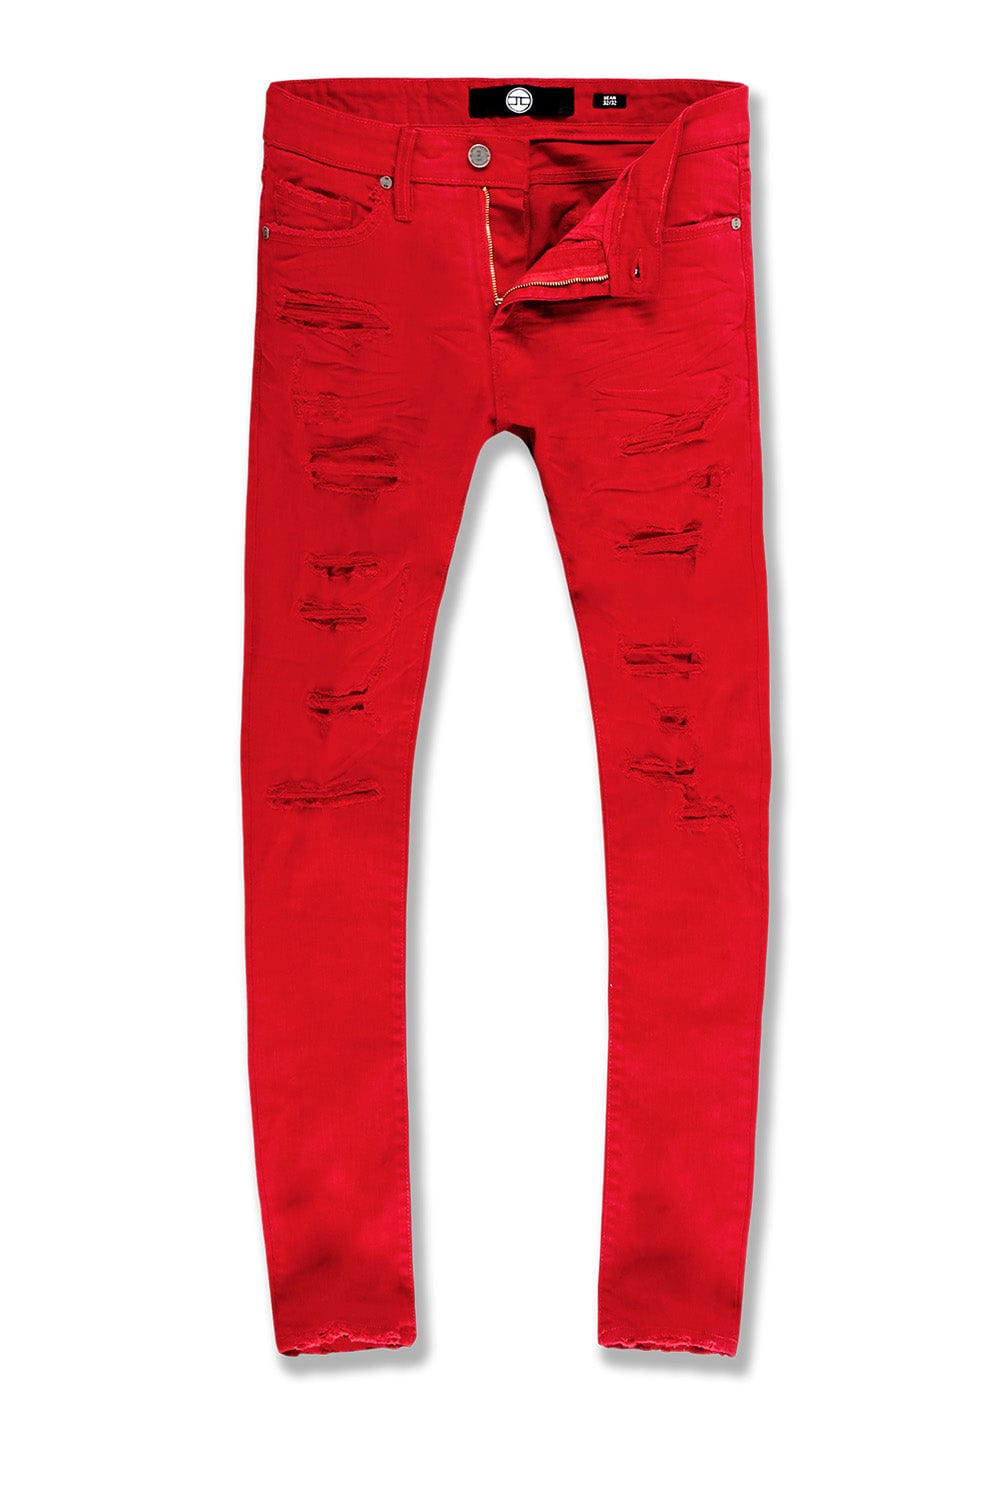 Jordan Craig Ross - Tribeca Twill Pants (Red) Red / 30/30